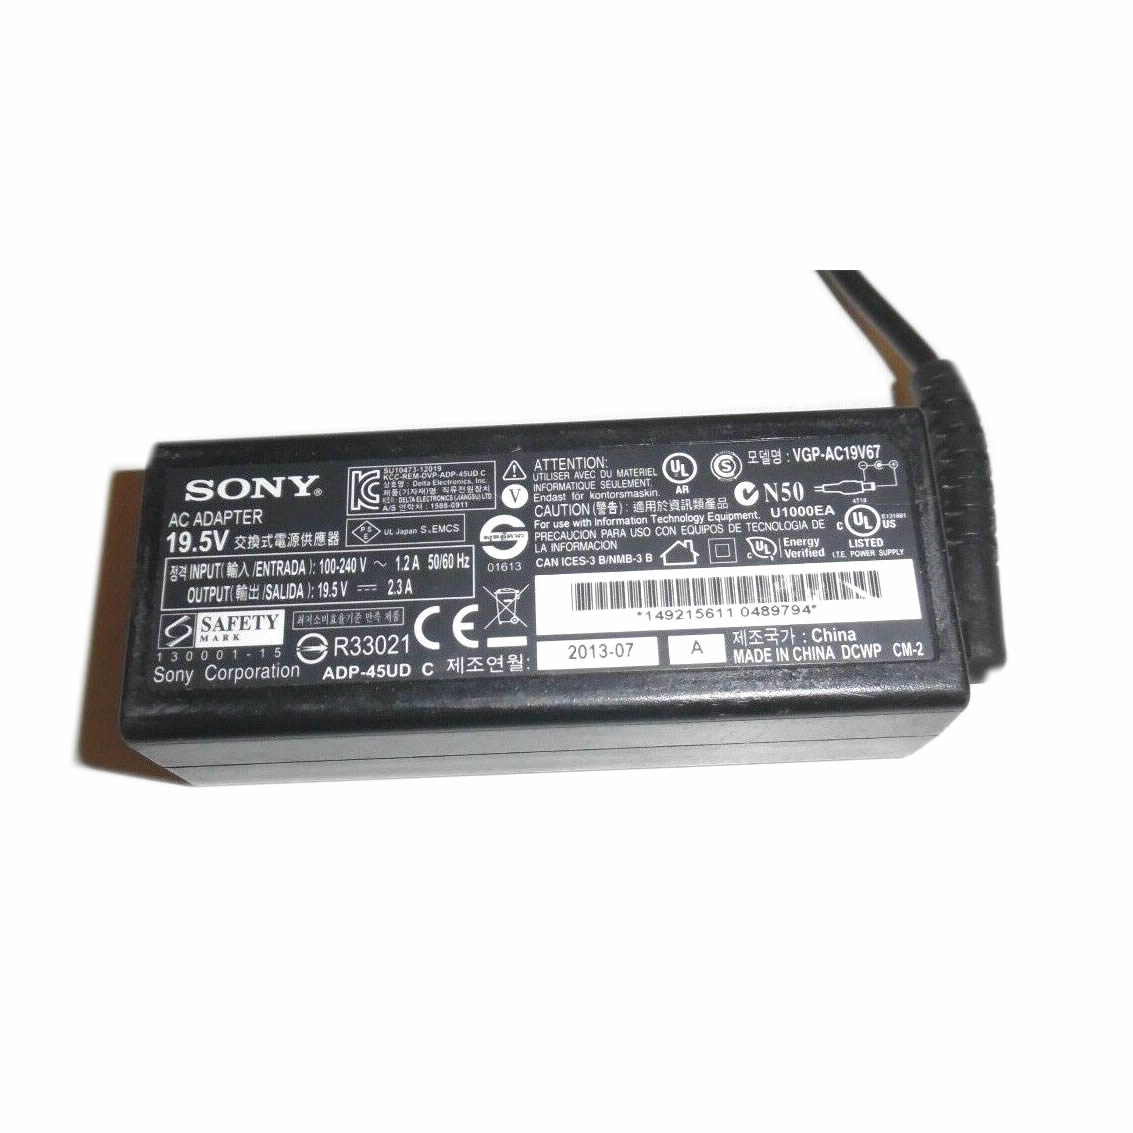 vgp-ac19v68 laptop ac adapter